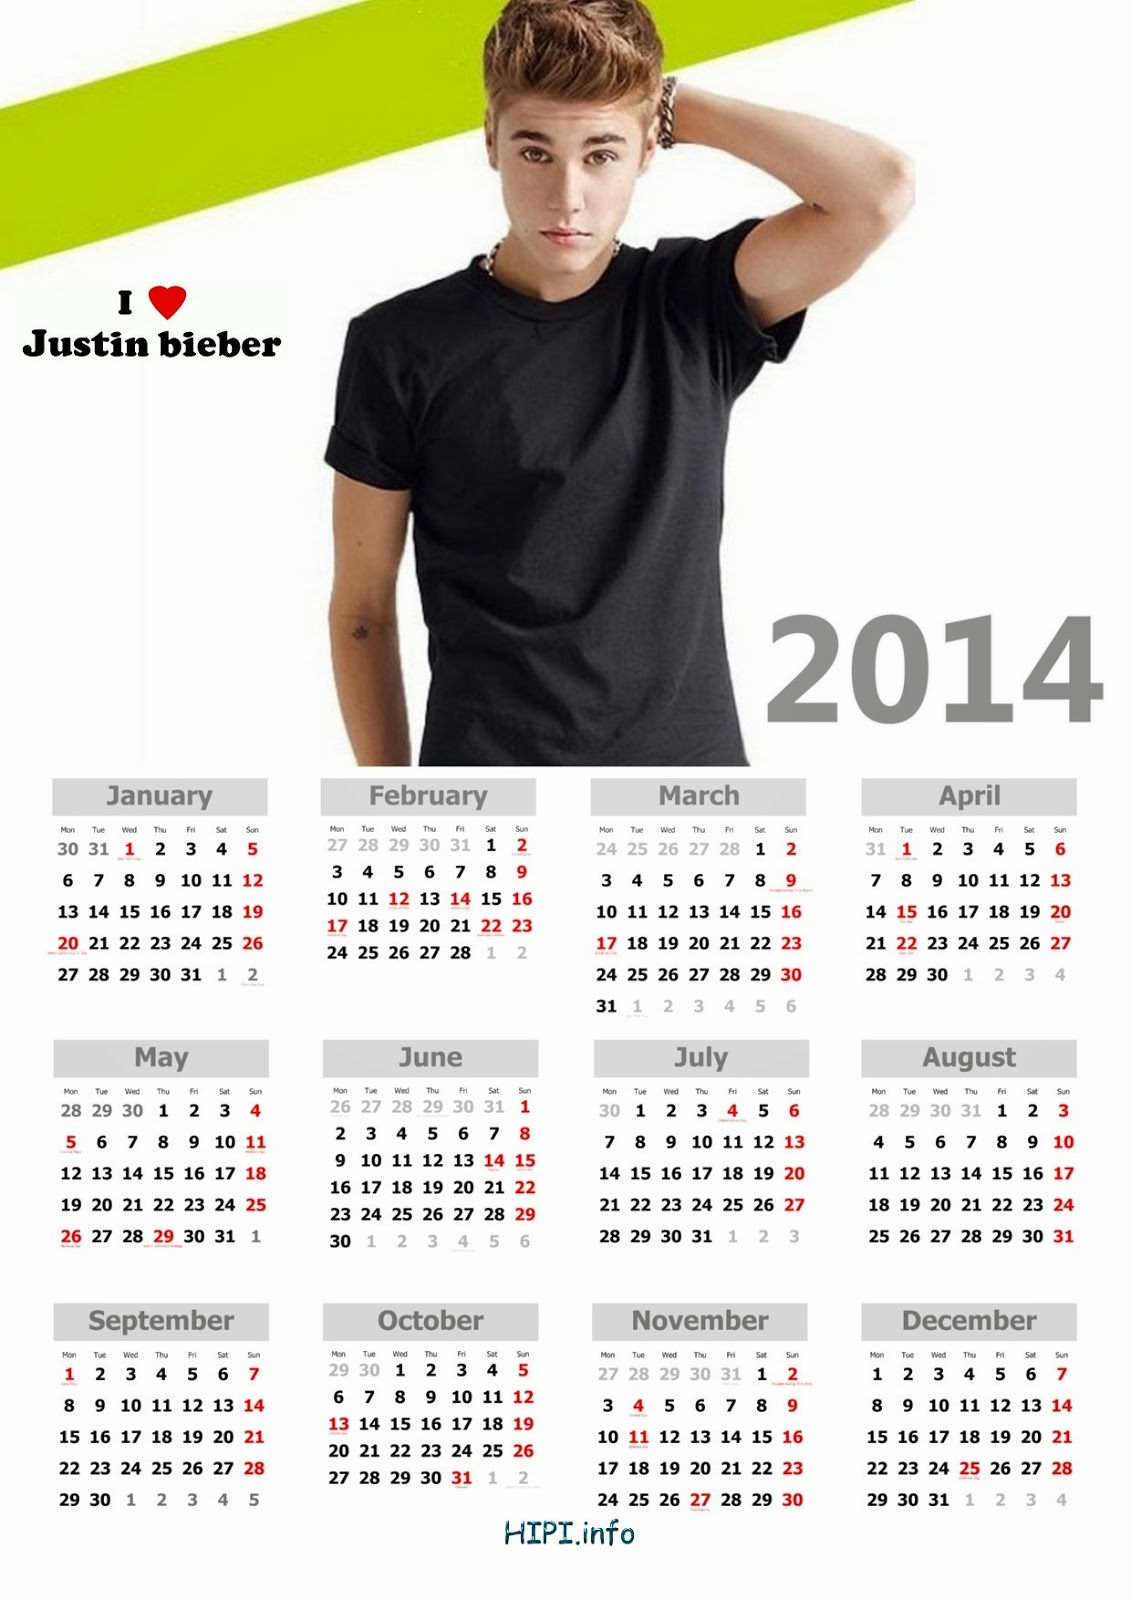 Free Download Wallpapers Calendars Justin Bieber 14 Calendar Printable Paper 1131x1600 For Your Desktop Mobile Tablet Explore 49 Justin Bieber 15 Calendar Wallpaper Justin Bieber 15 Calendar Wallpaper